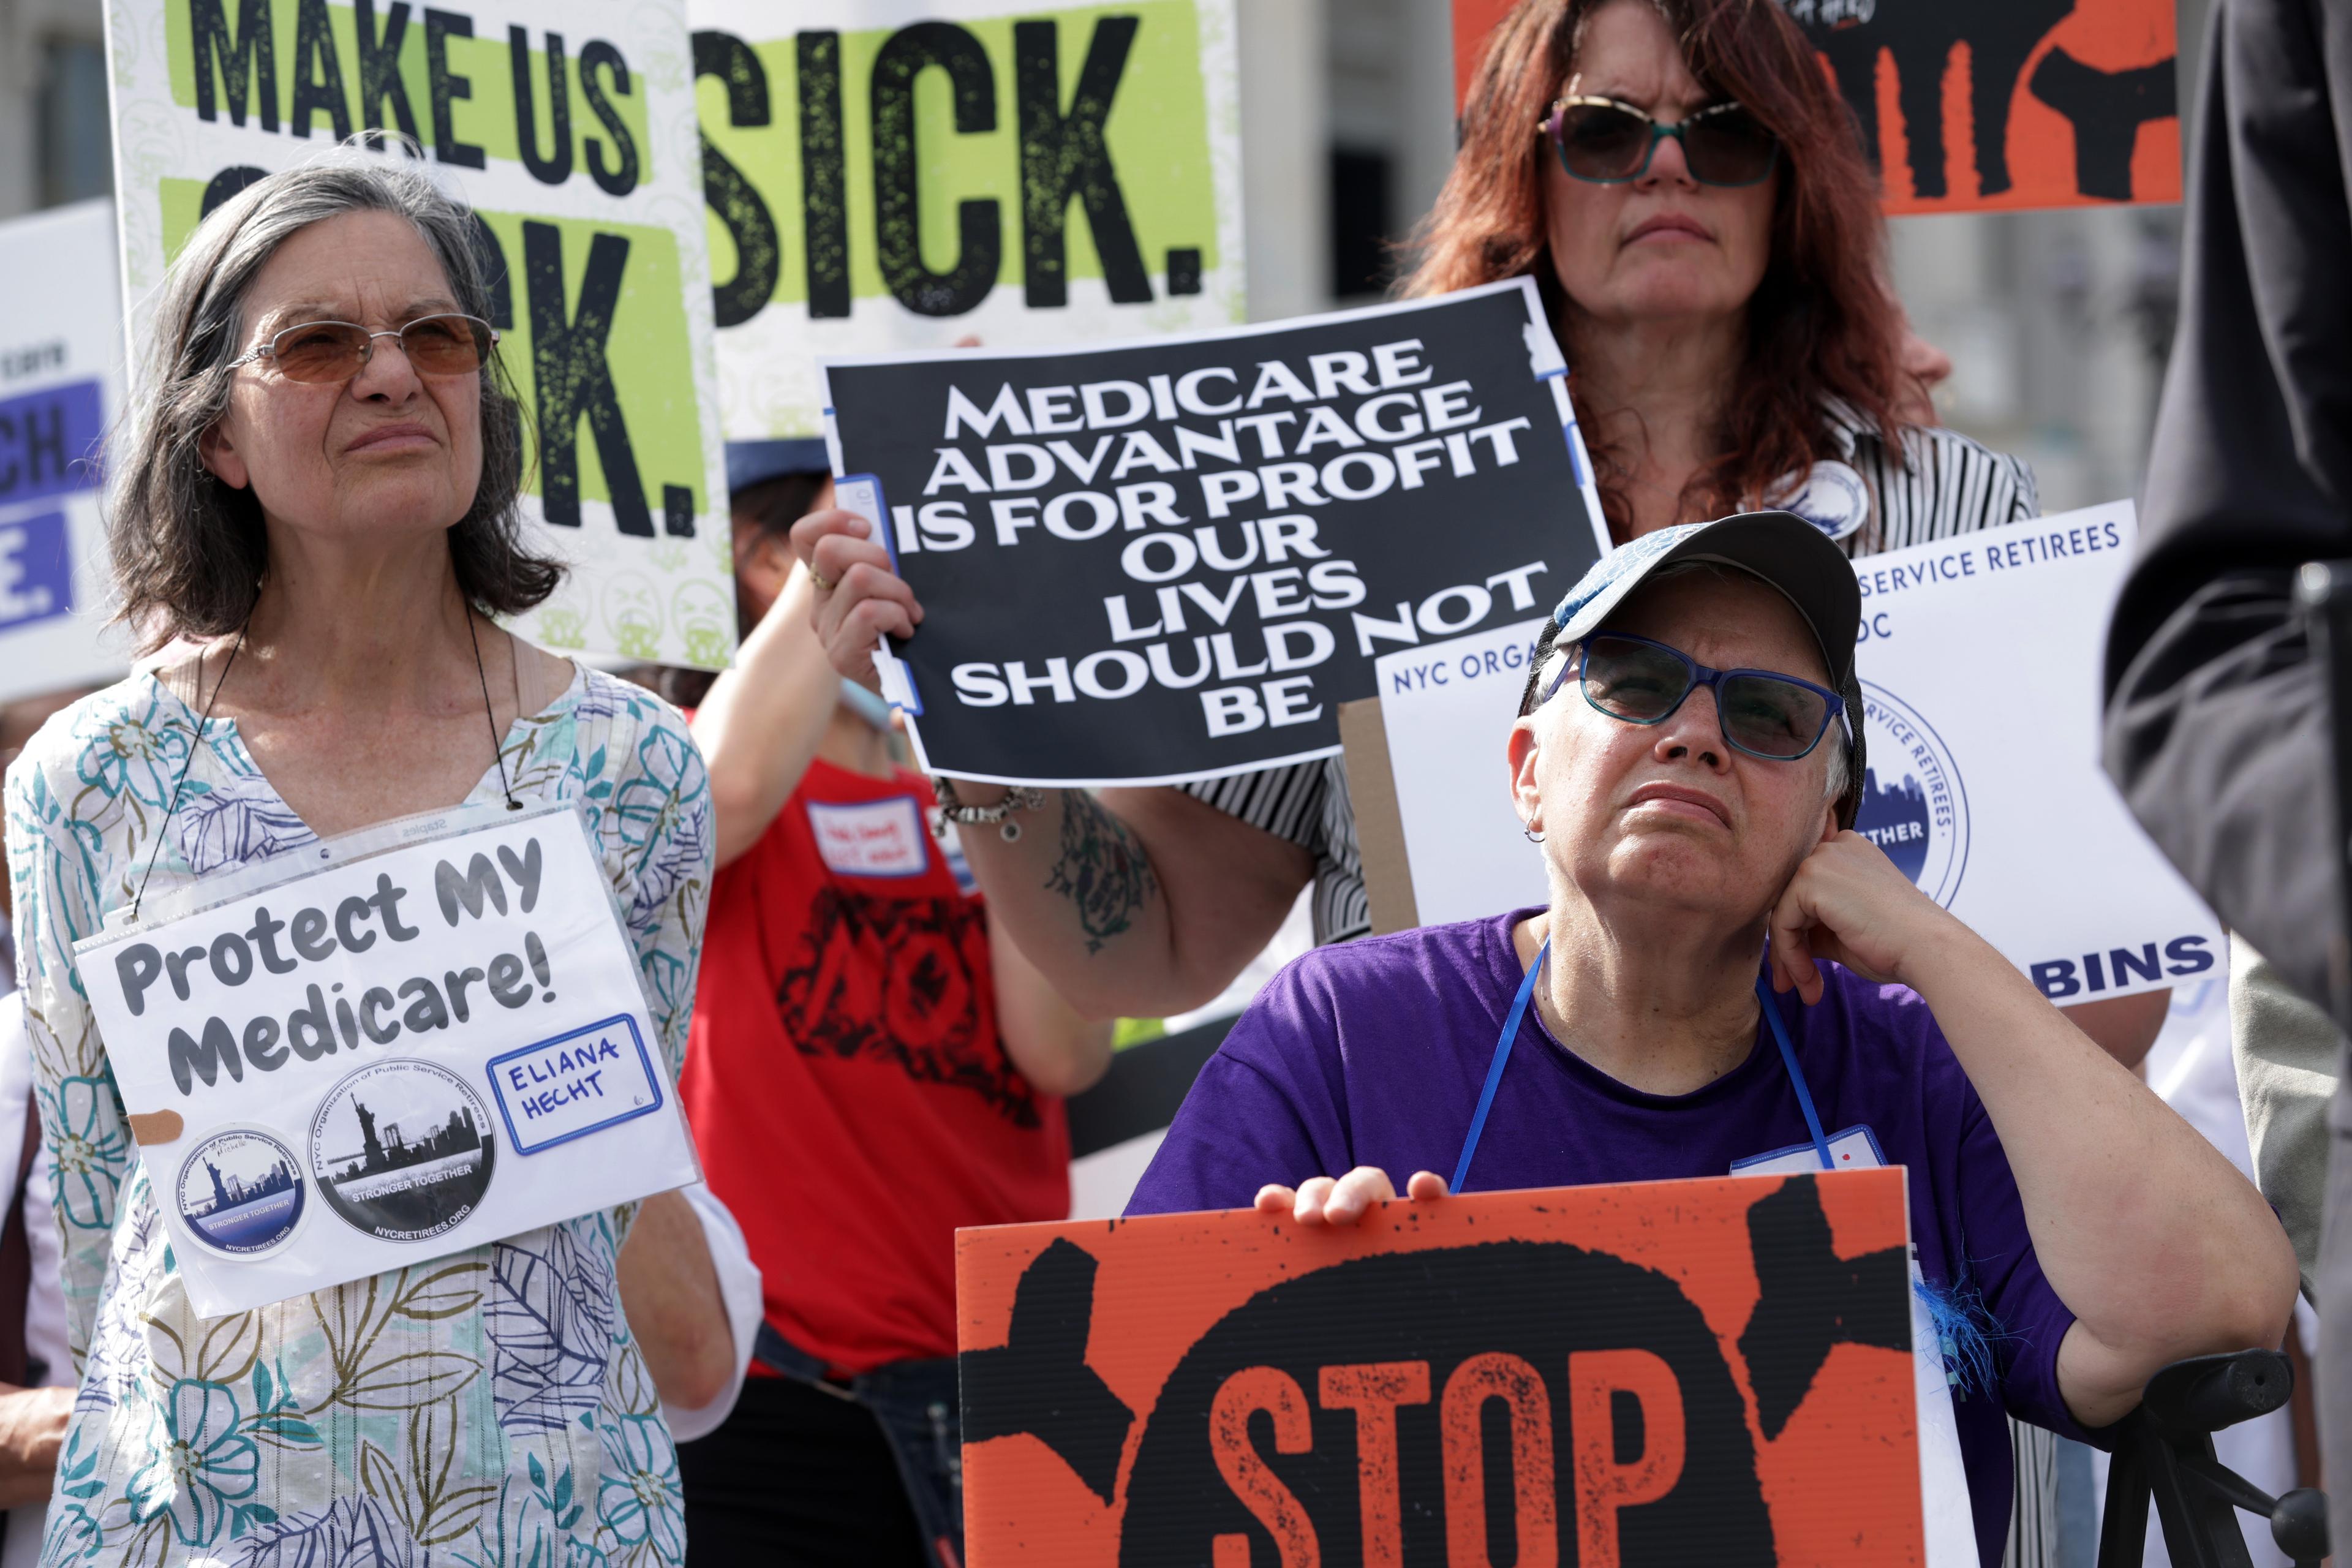 'It was stunning': Bipartisan anger aimed at Medicare Advantage care denials